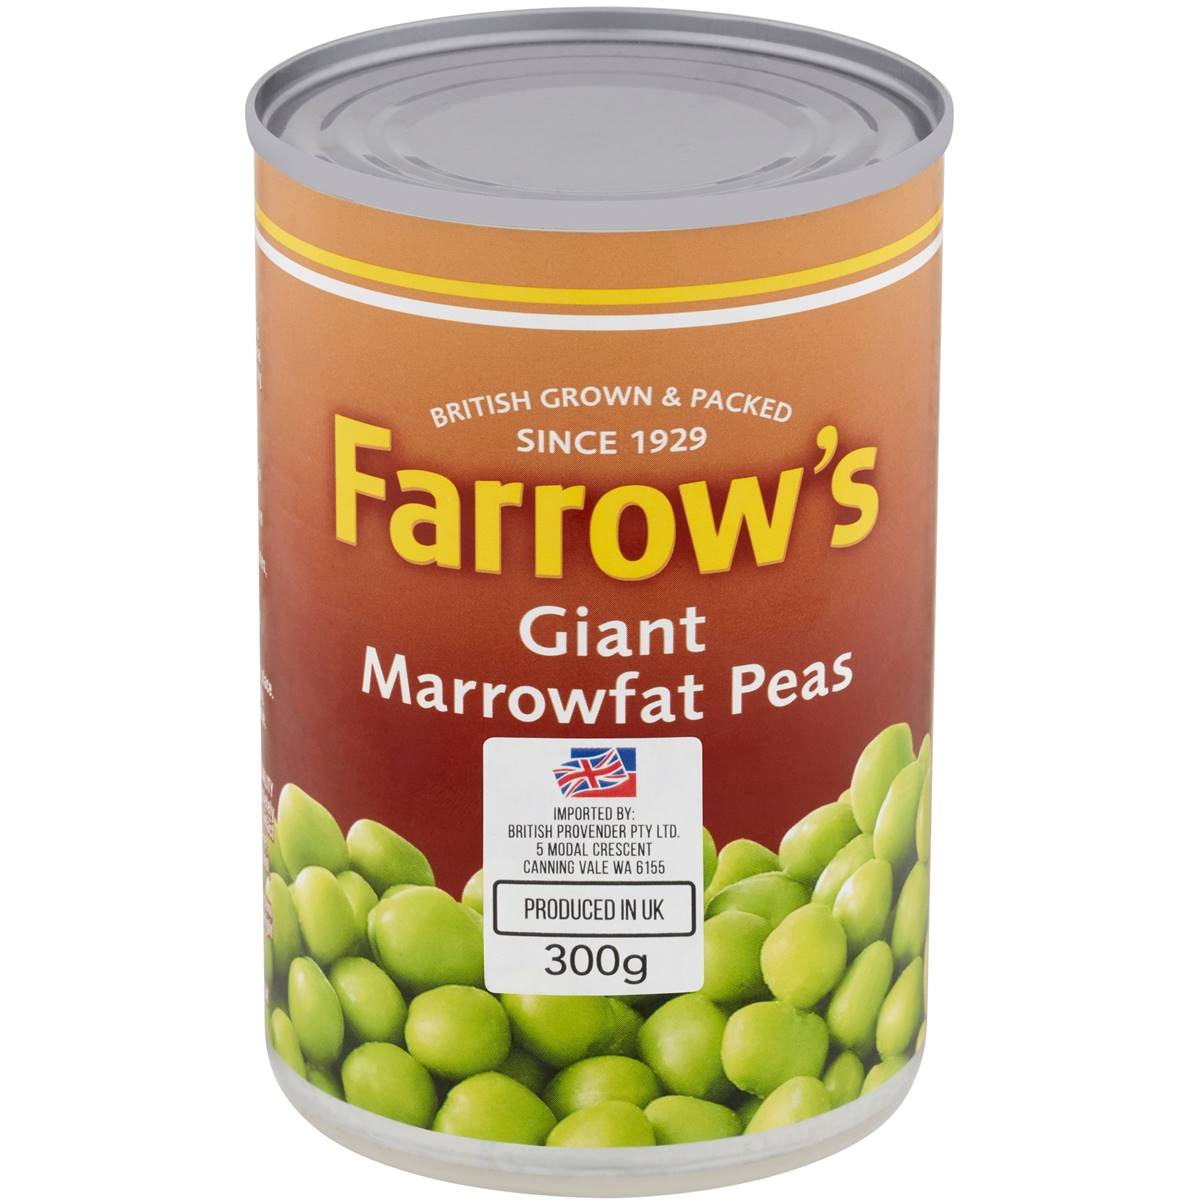 Calories in Farrows Giant Marrowfat Peas